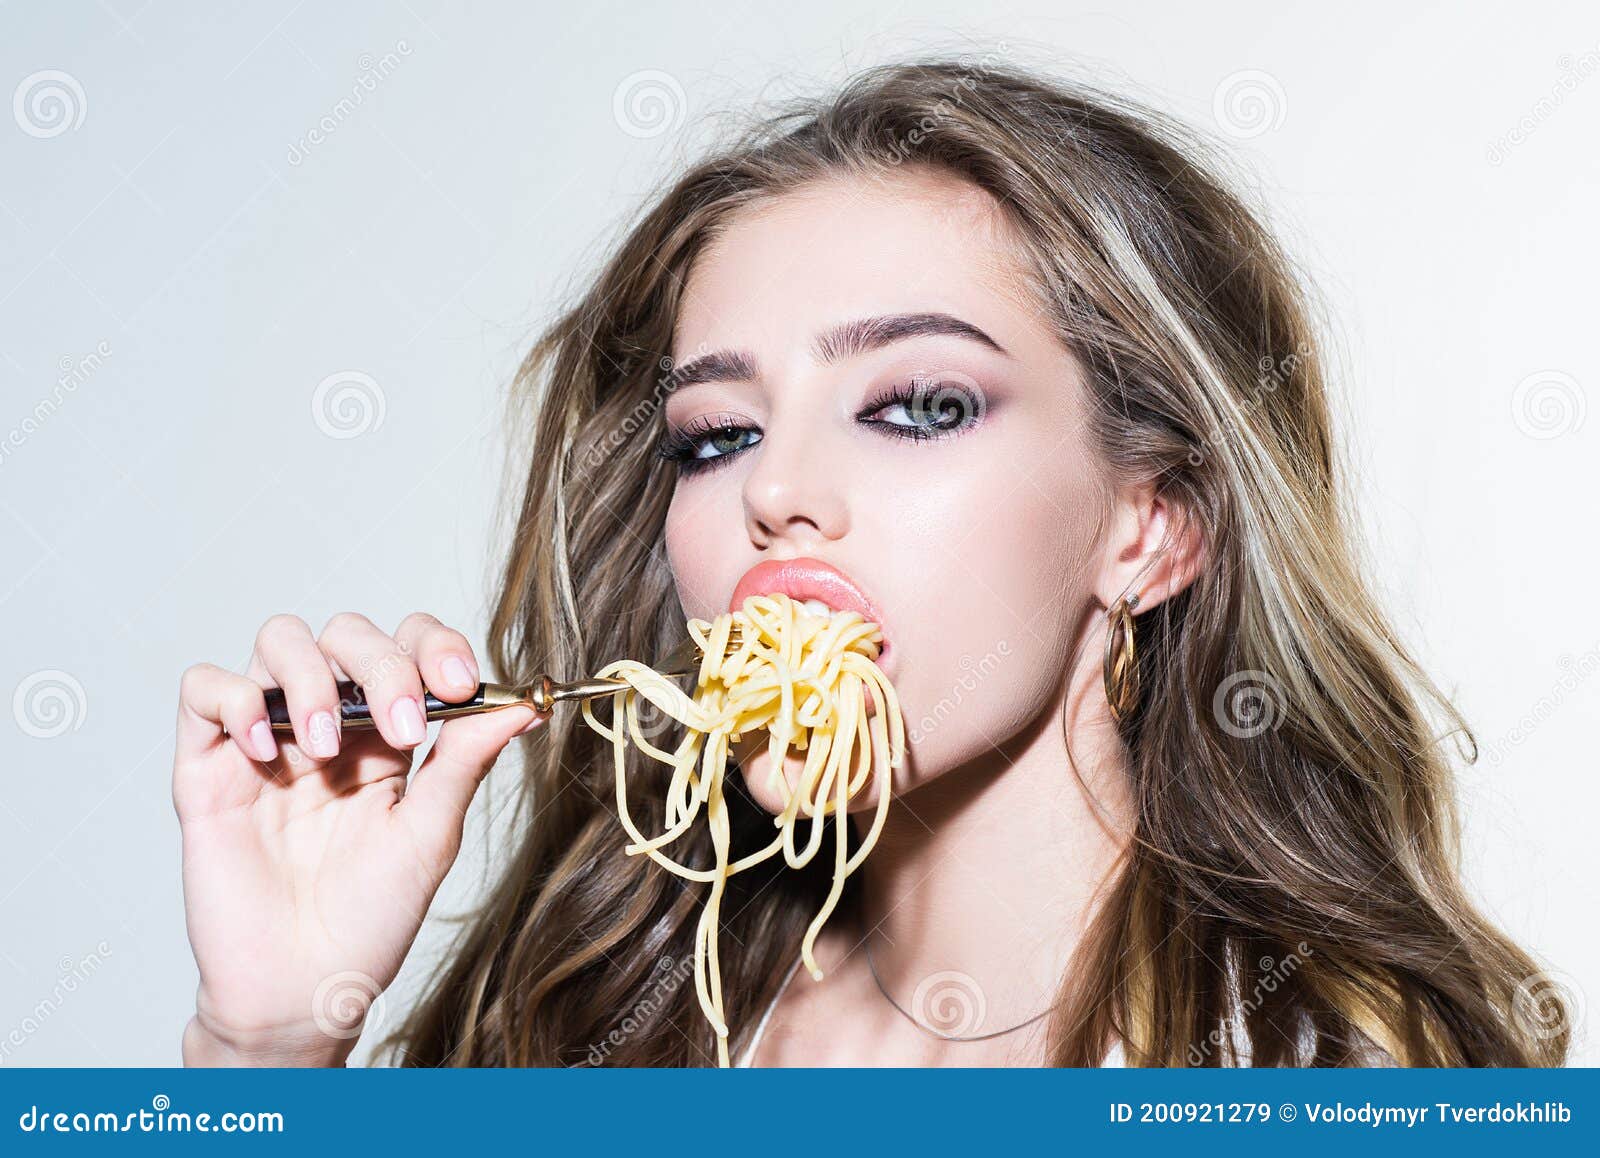 traición Centelleo Continuo Sexy Noodles Stock Photos - Free & Royalty-Free Stock Photos from Dreamstime